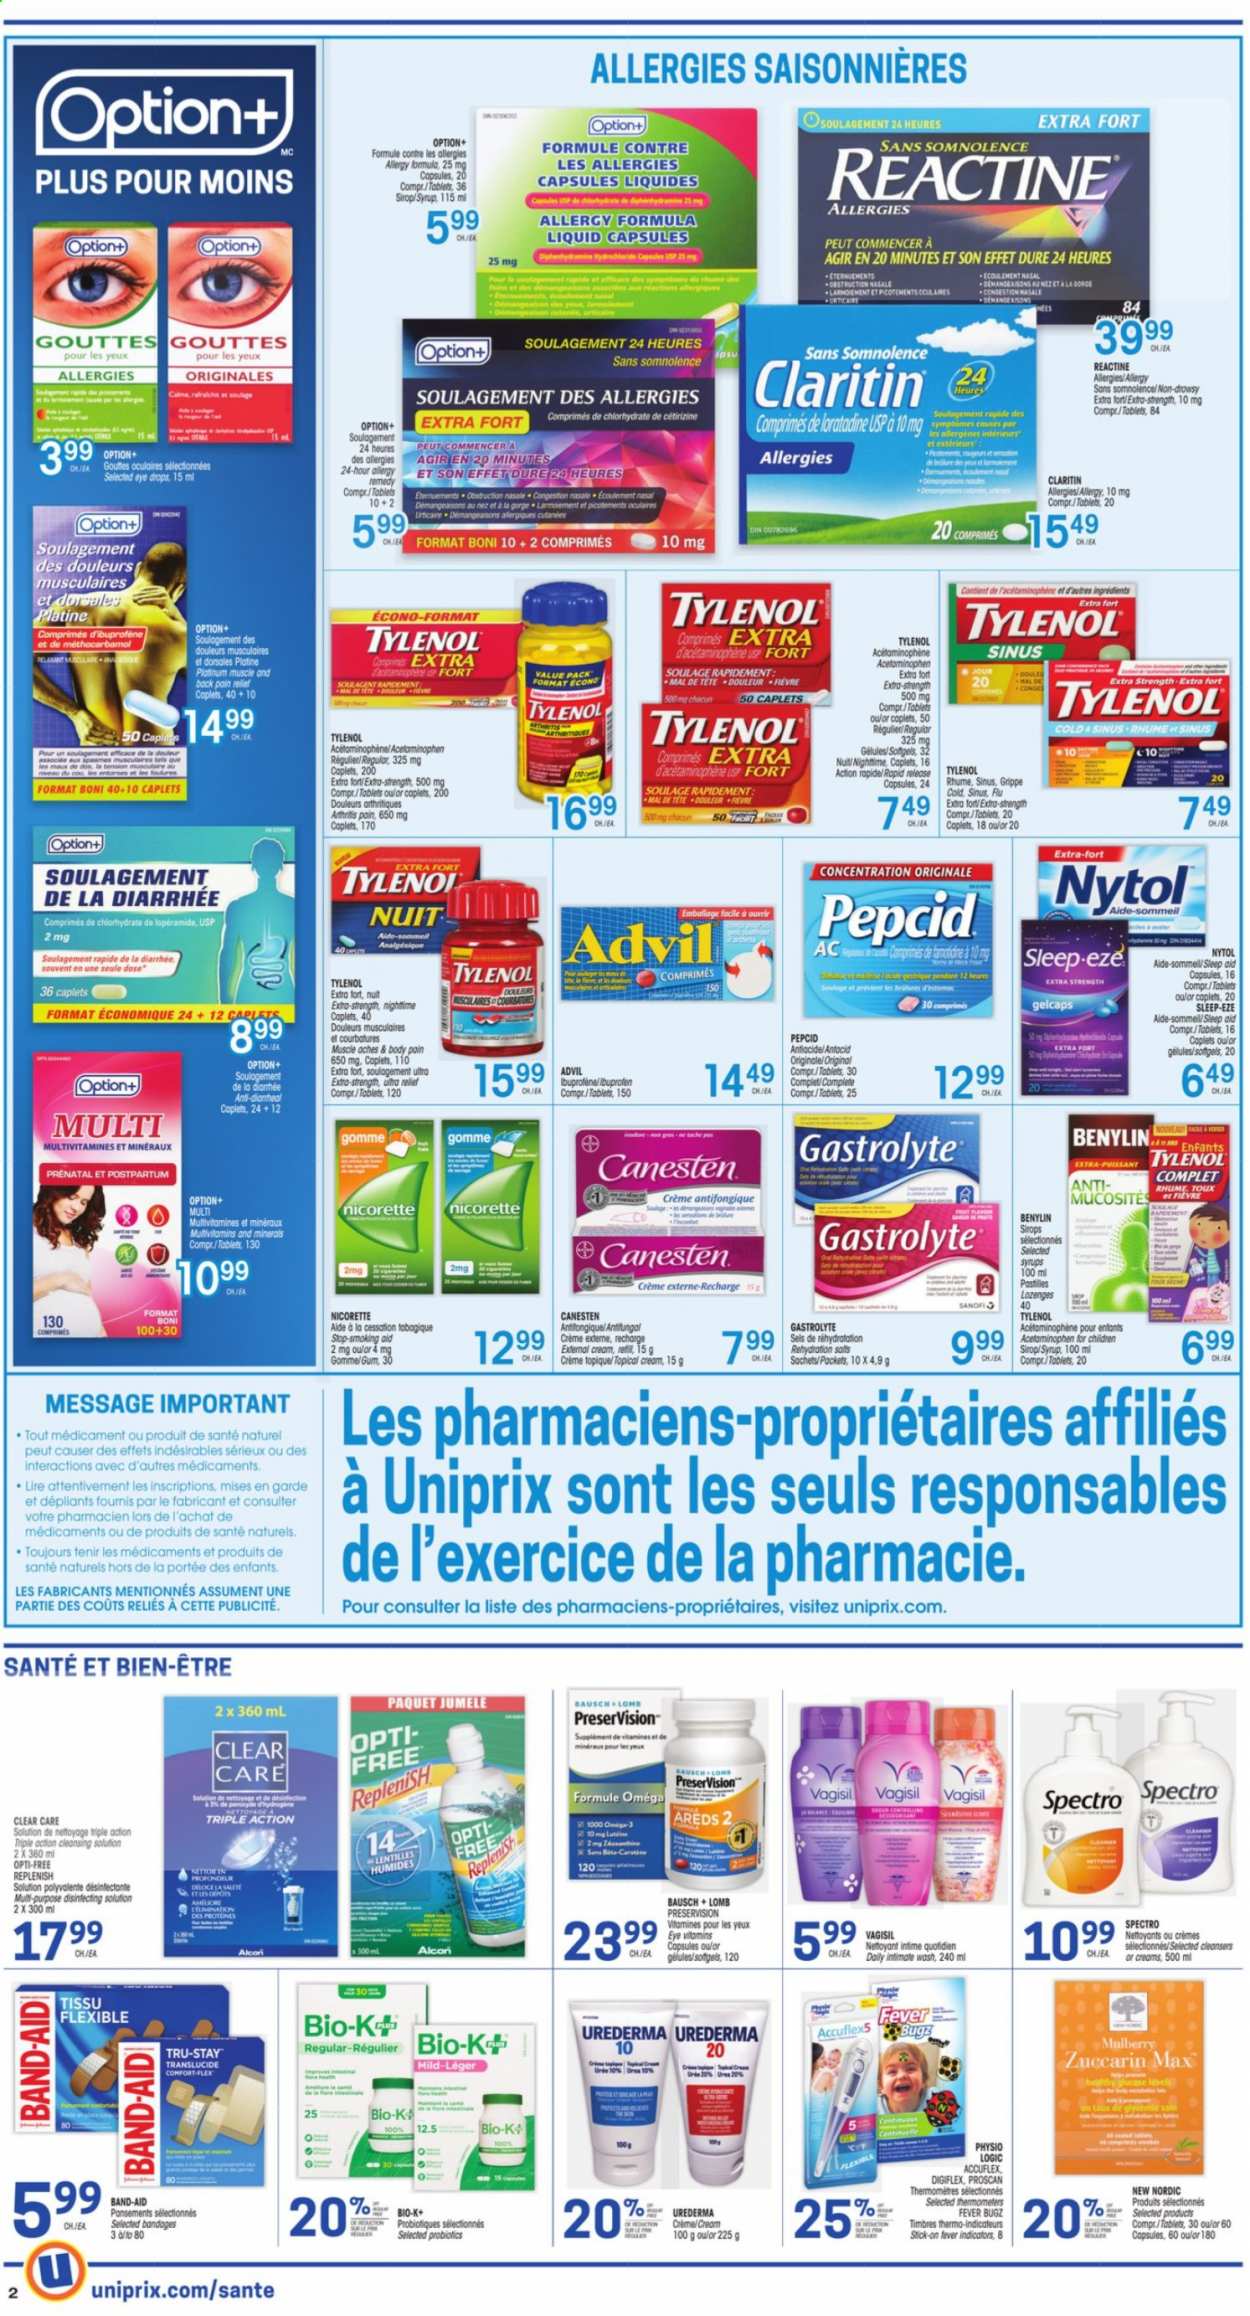 thumbnail - Uniprix Flyer - June 10, 2021 - June 16, 2021 - Sales products - syrup, Clear Care, Nicorette, Tylenol, Prenatal, probiotics, Pepcid, Advil Rapid, Benylin. Page 3.